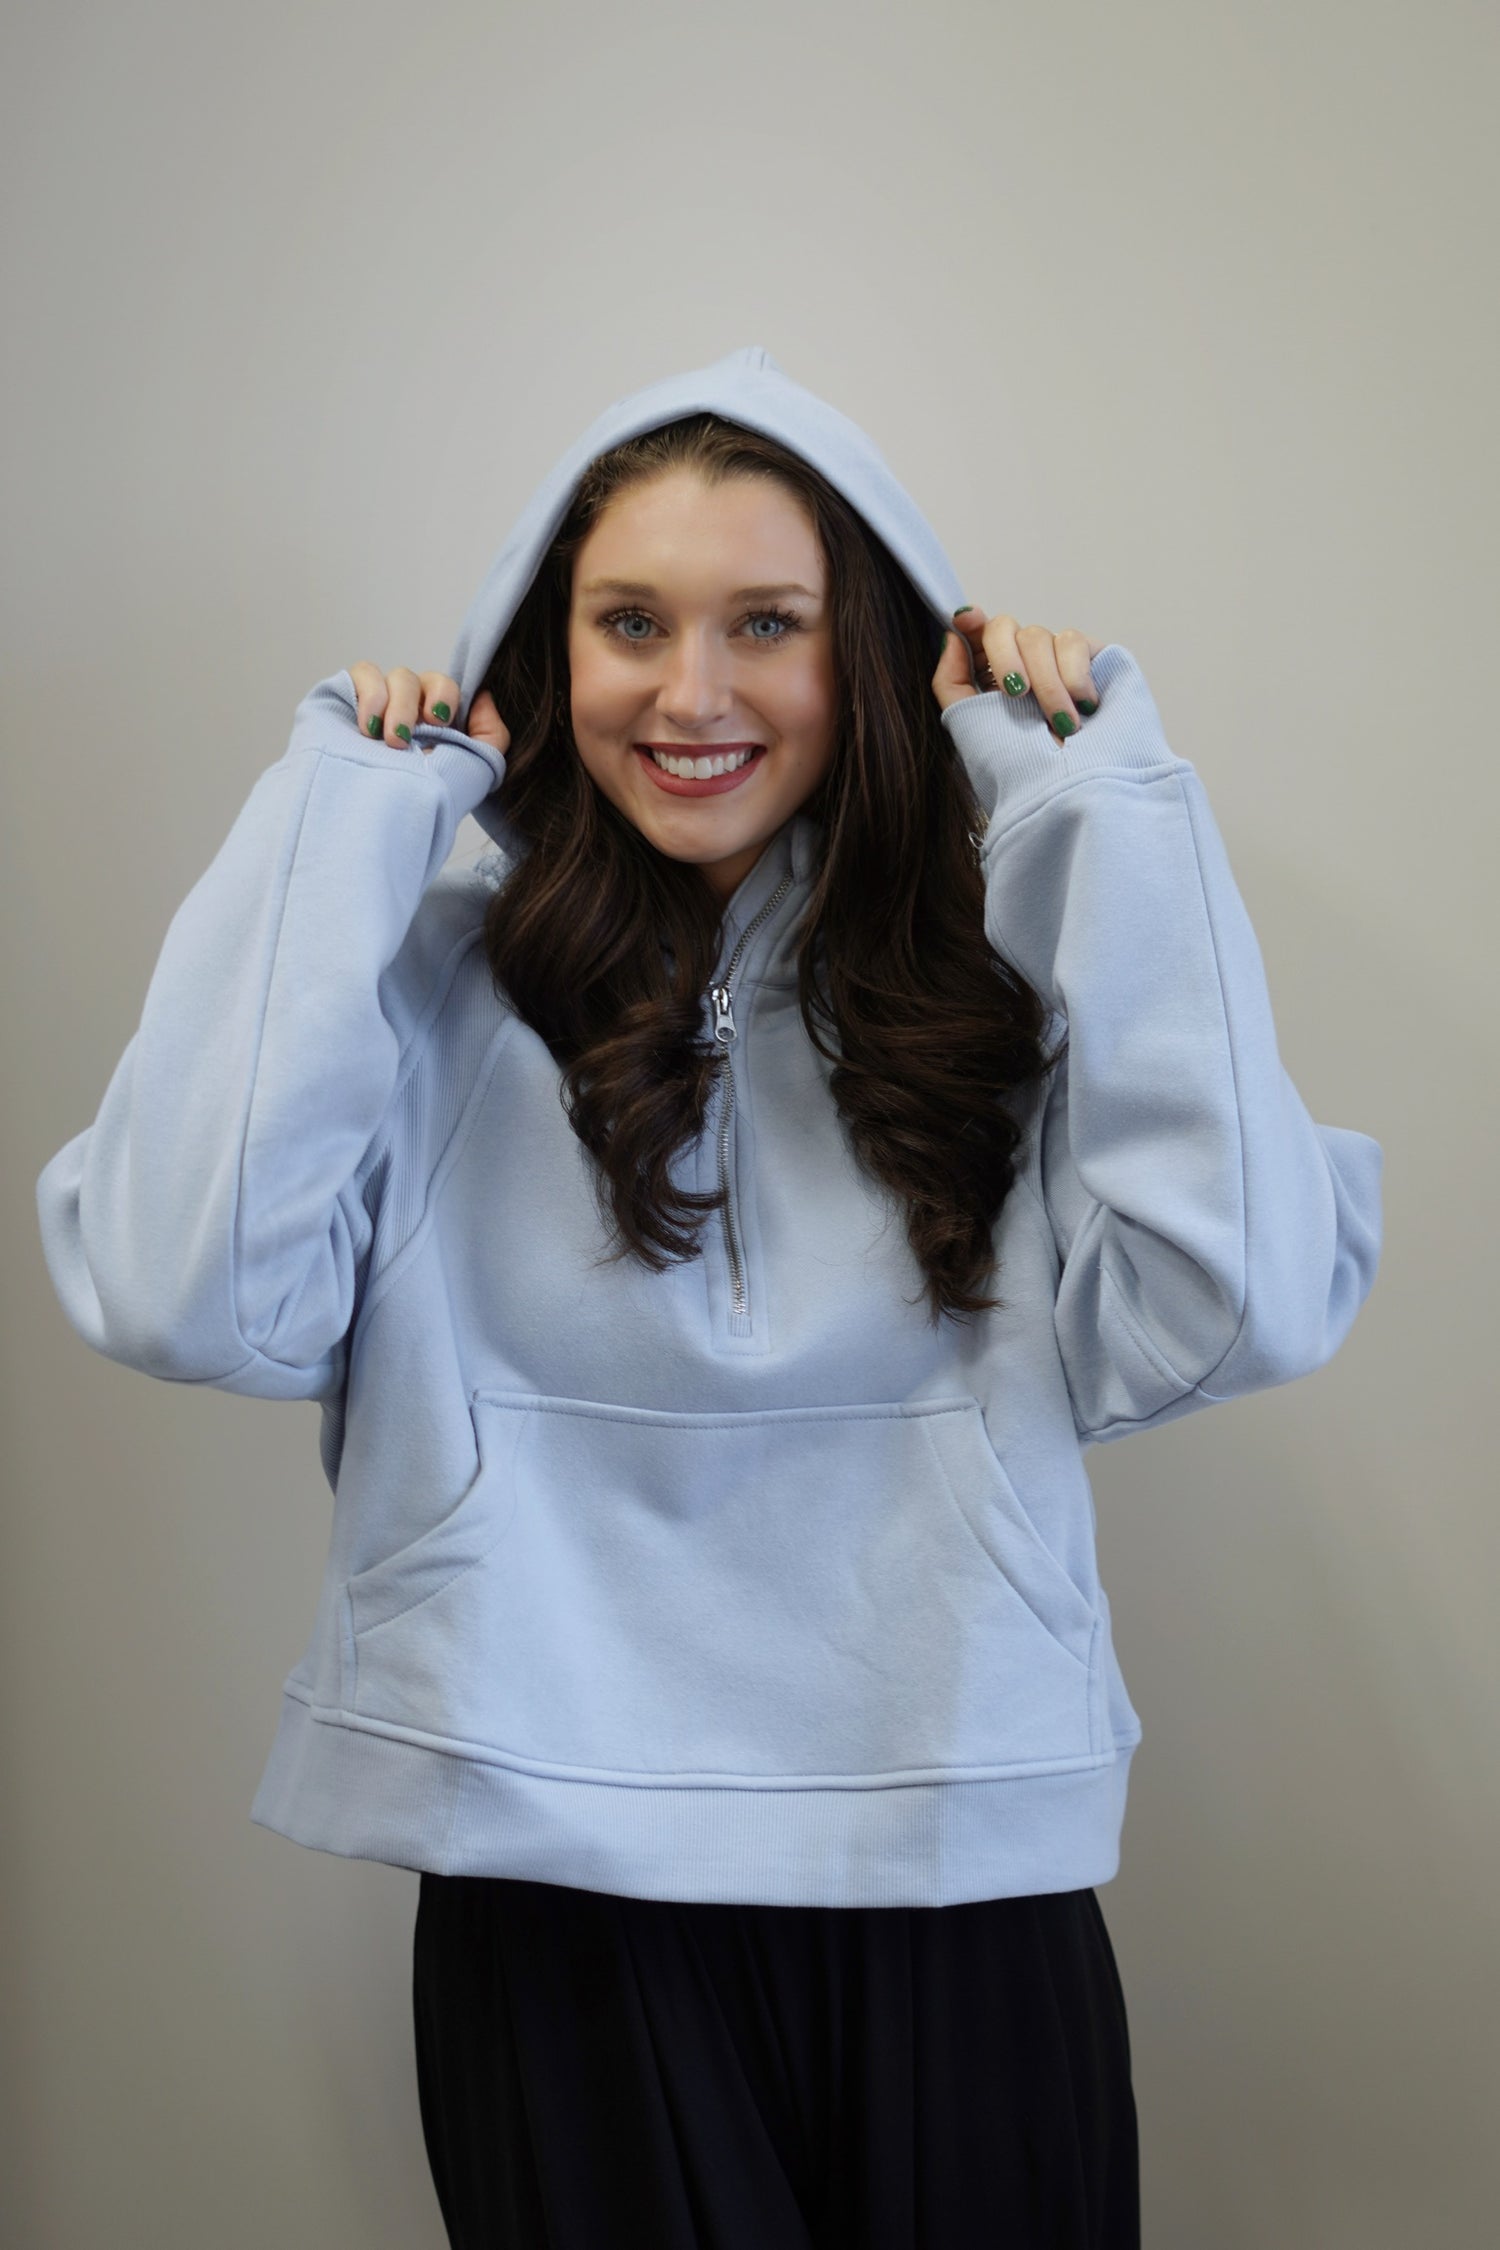 Sarah Scuba Hooded Sweatshirt Quarter Zip Long Cuffed Sleeves Kangaroo Pocket Colors:  Sky Blue Skimmer Length Relaxed Fit 70% Polyester, 30% Cotton